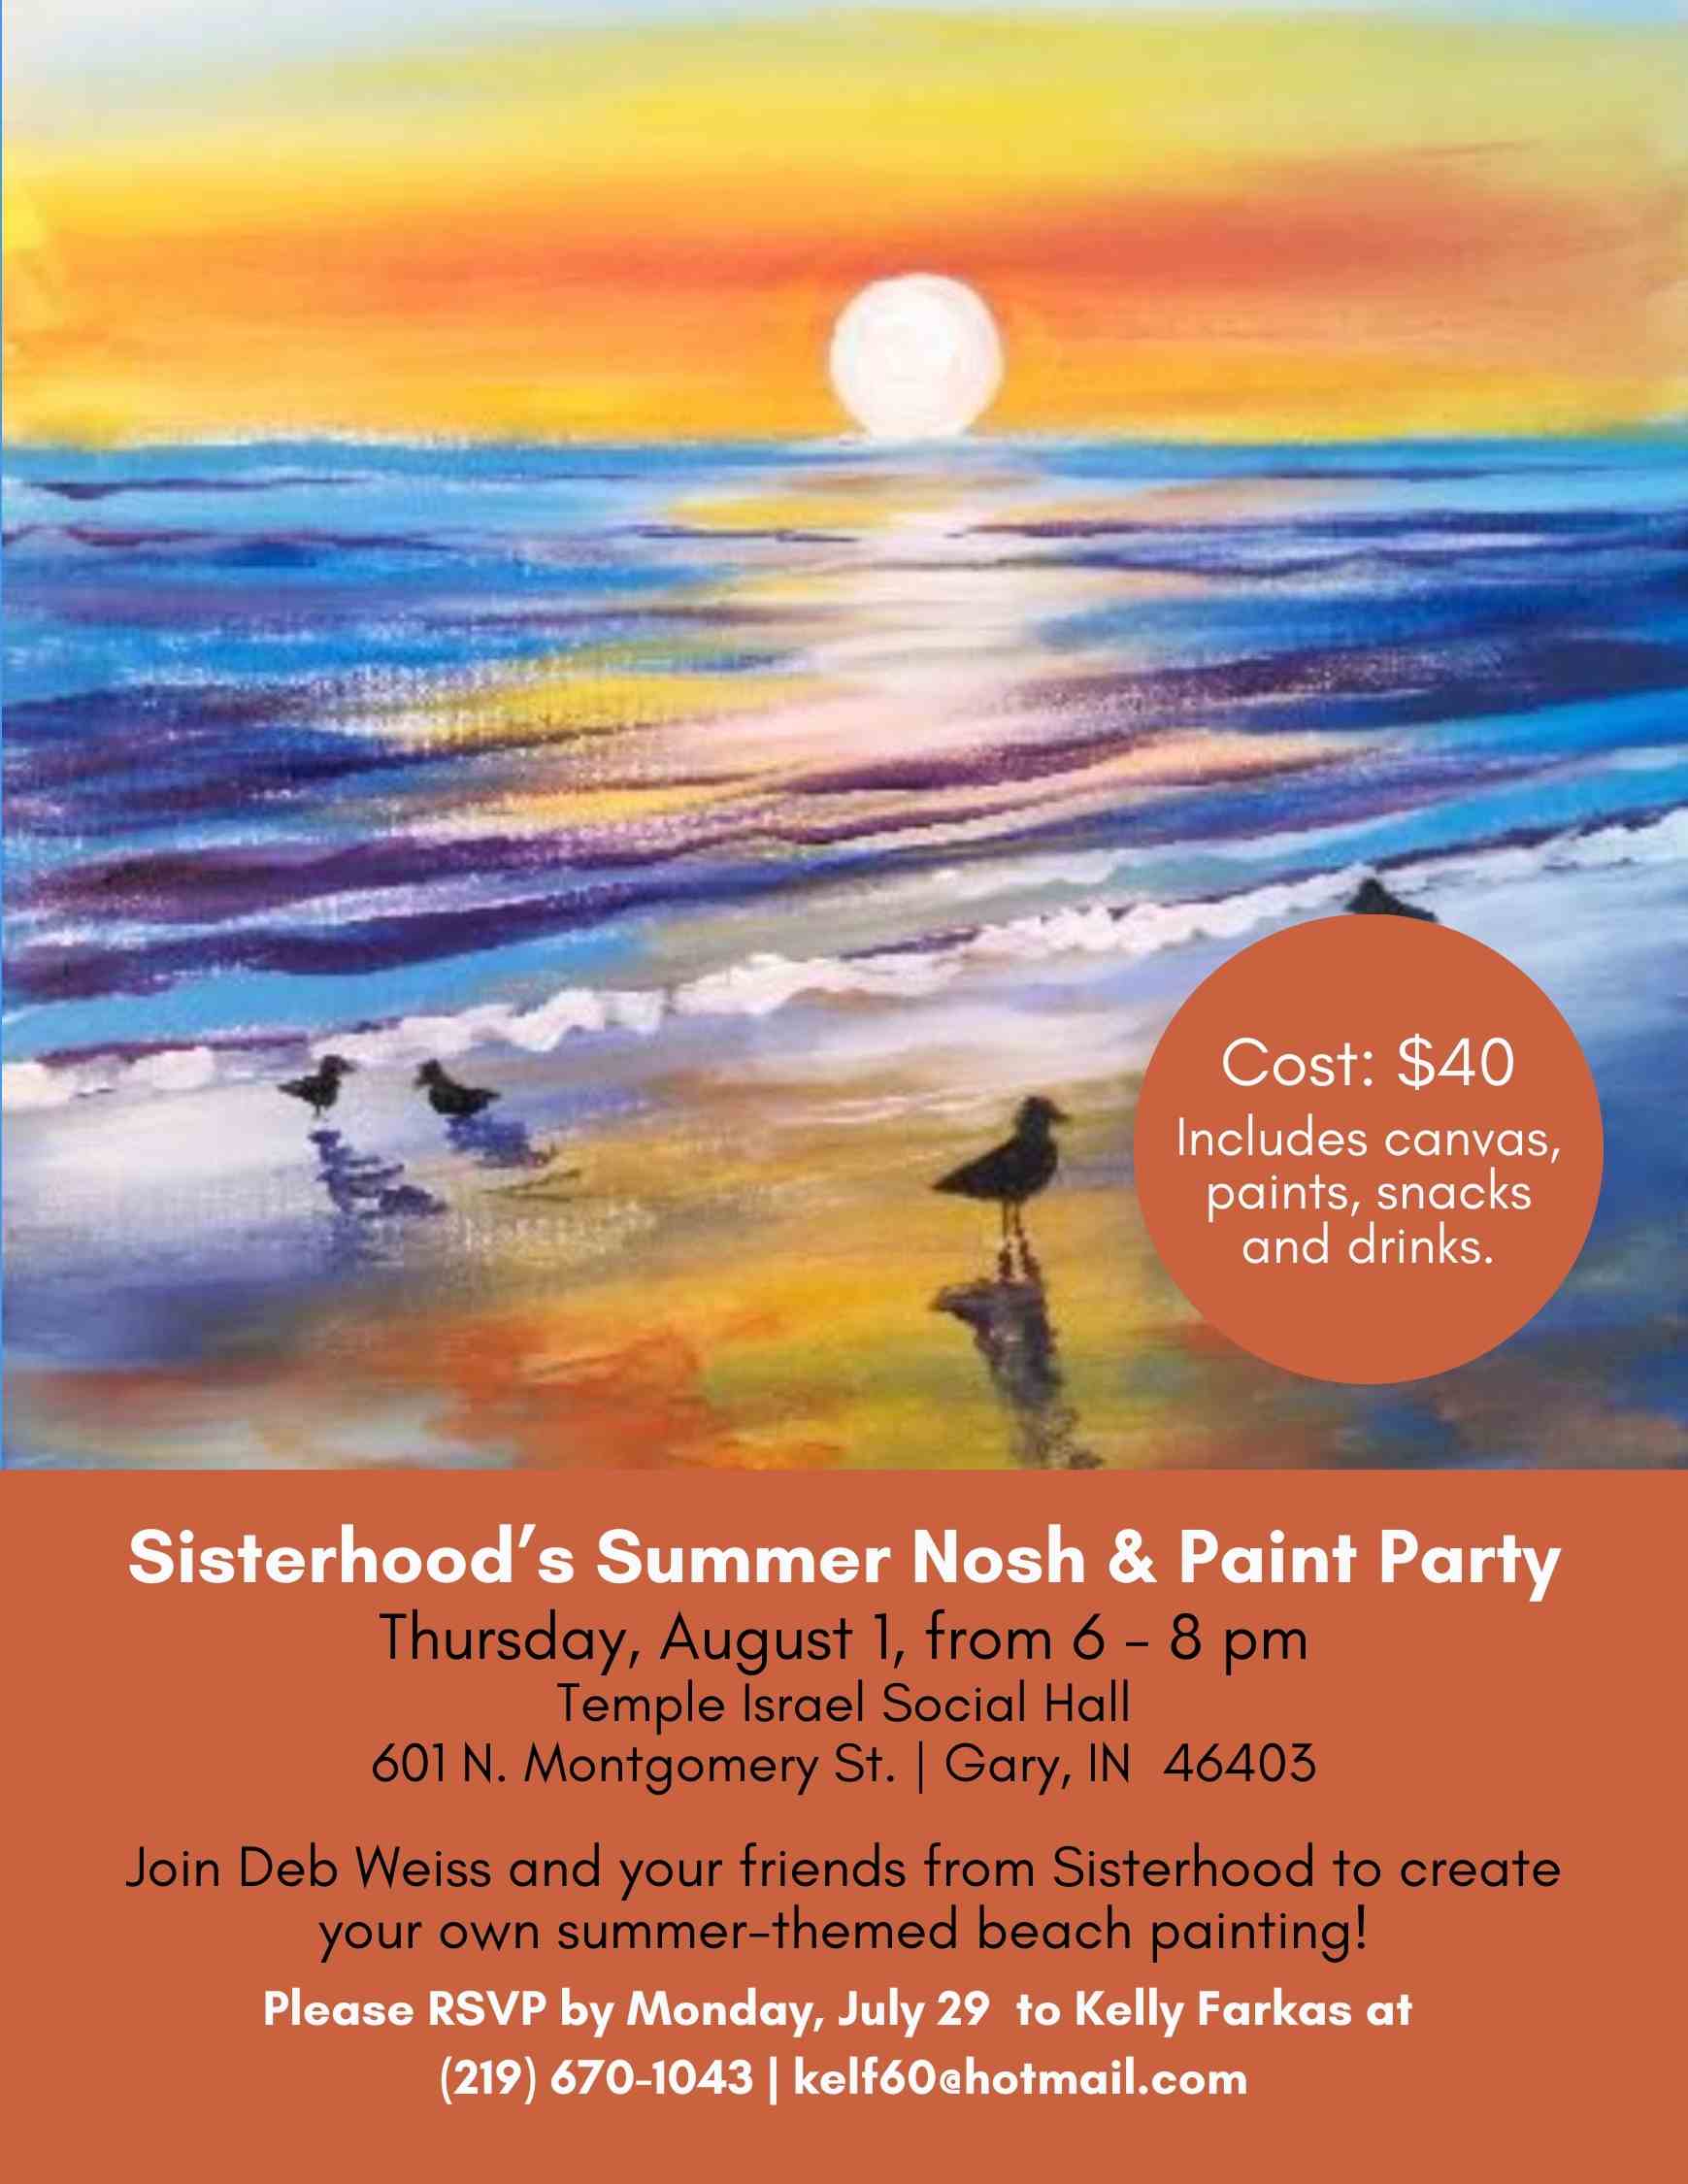 Sisterhood’s Summer Nosh & Paint